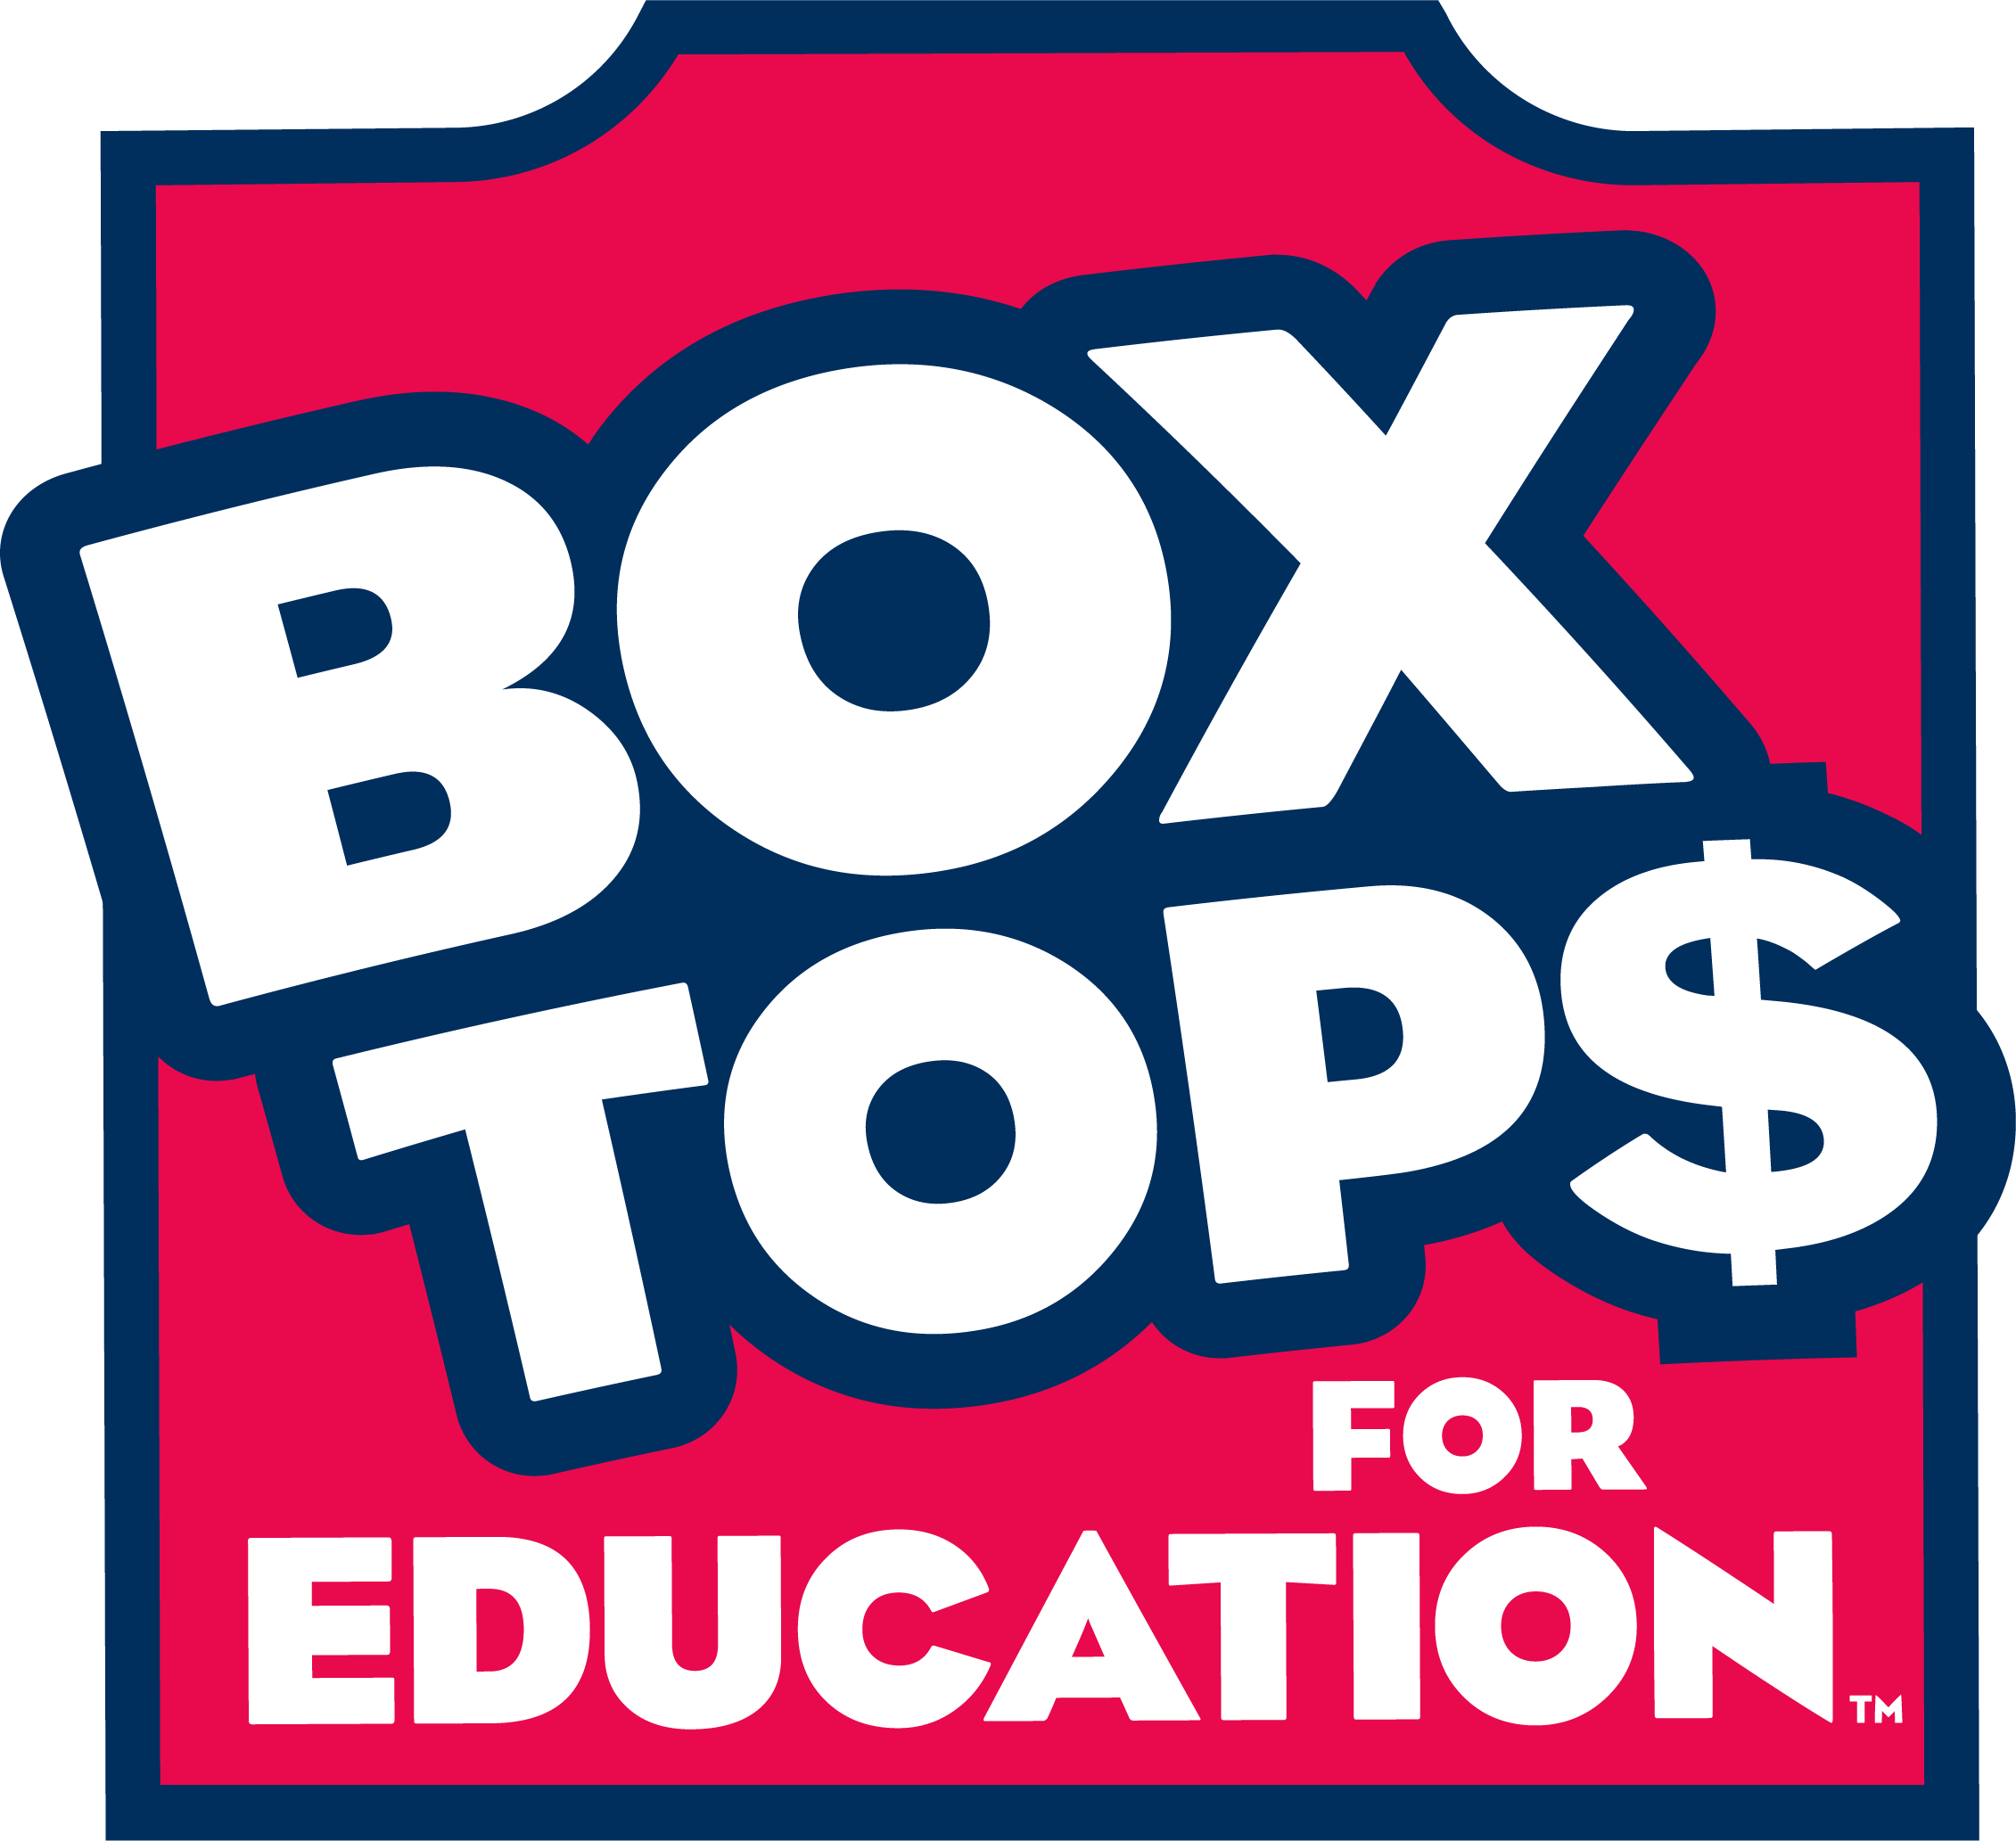 Box tops for education logo